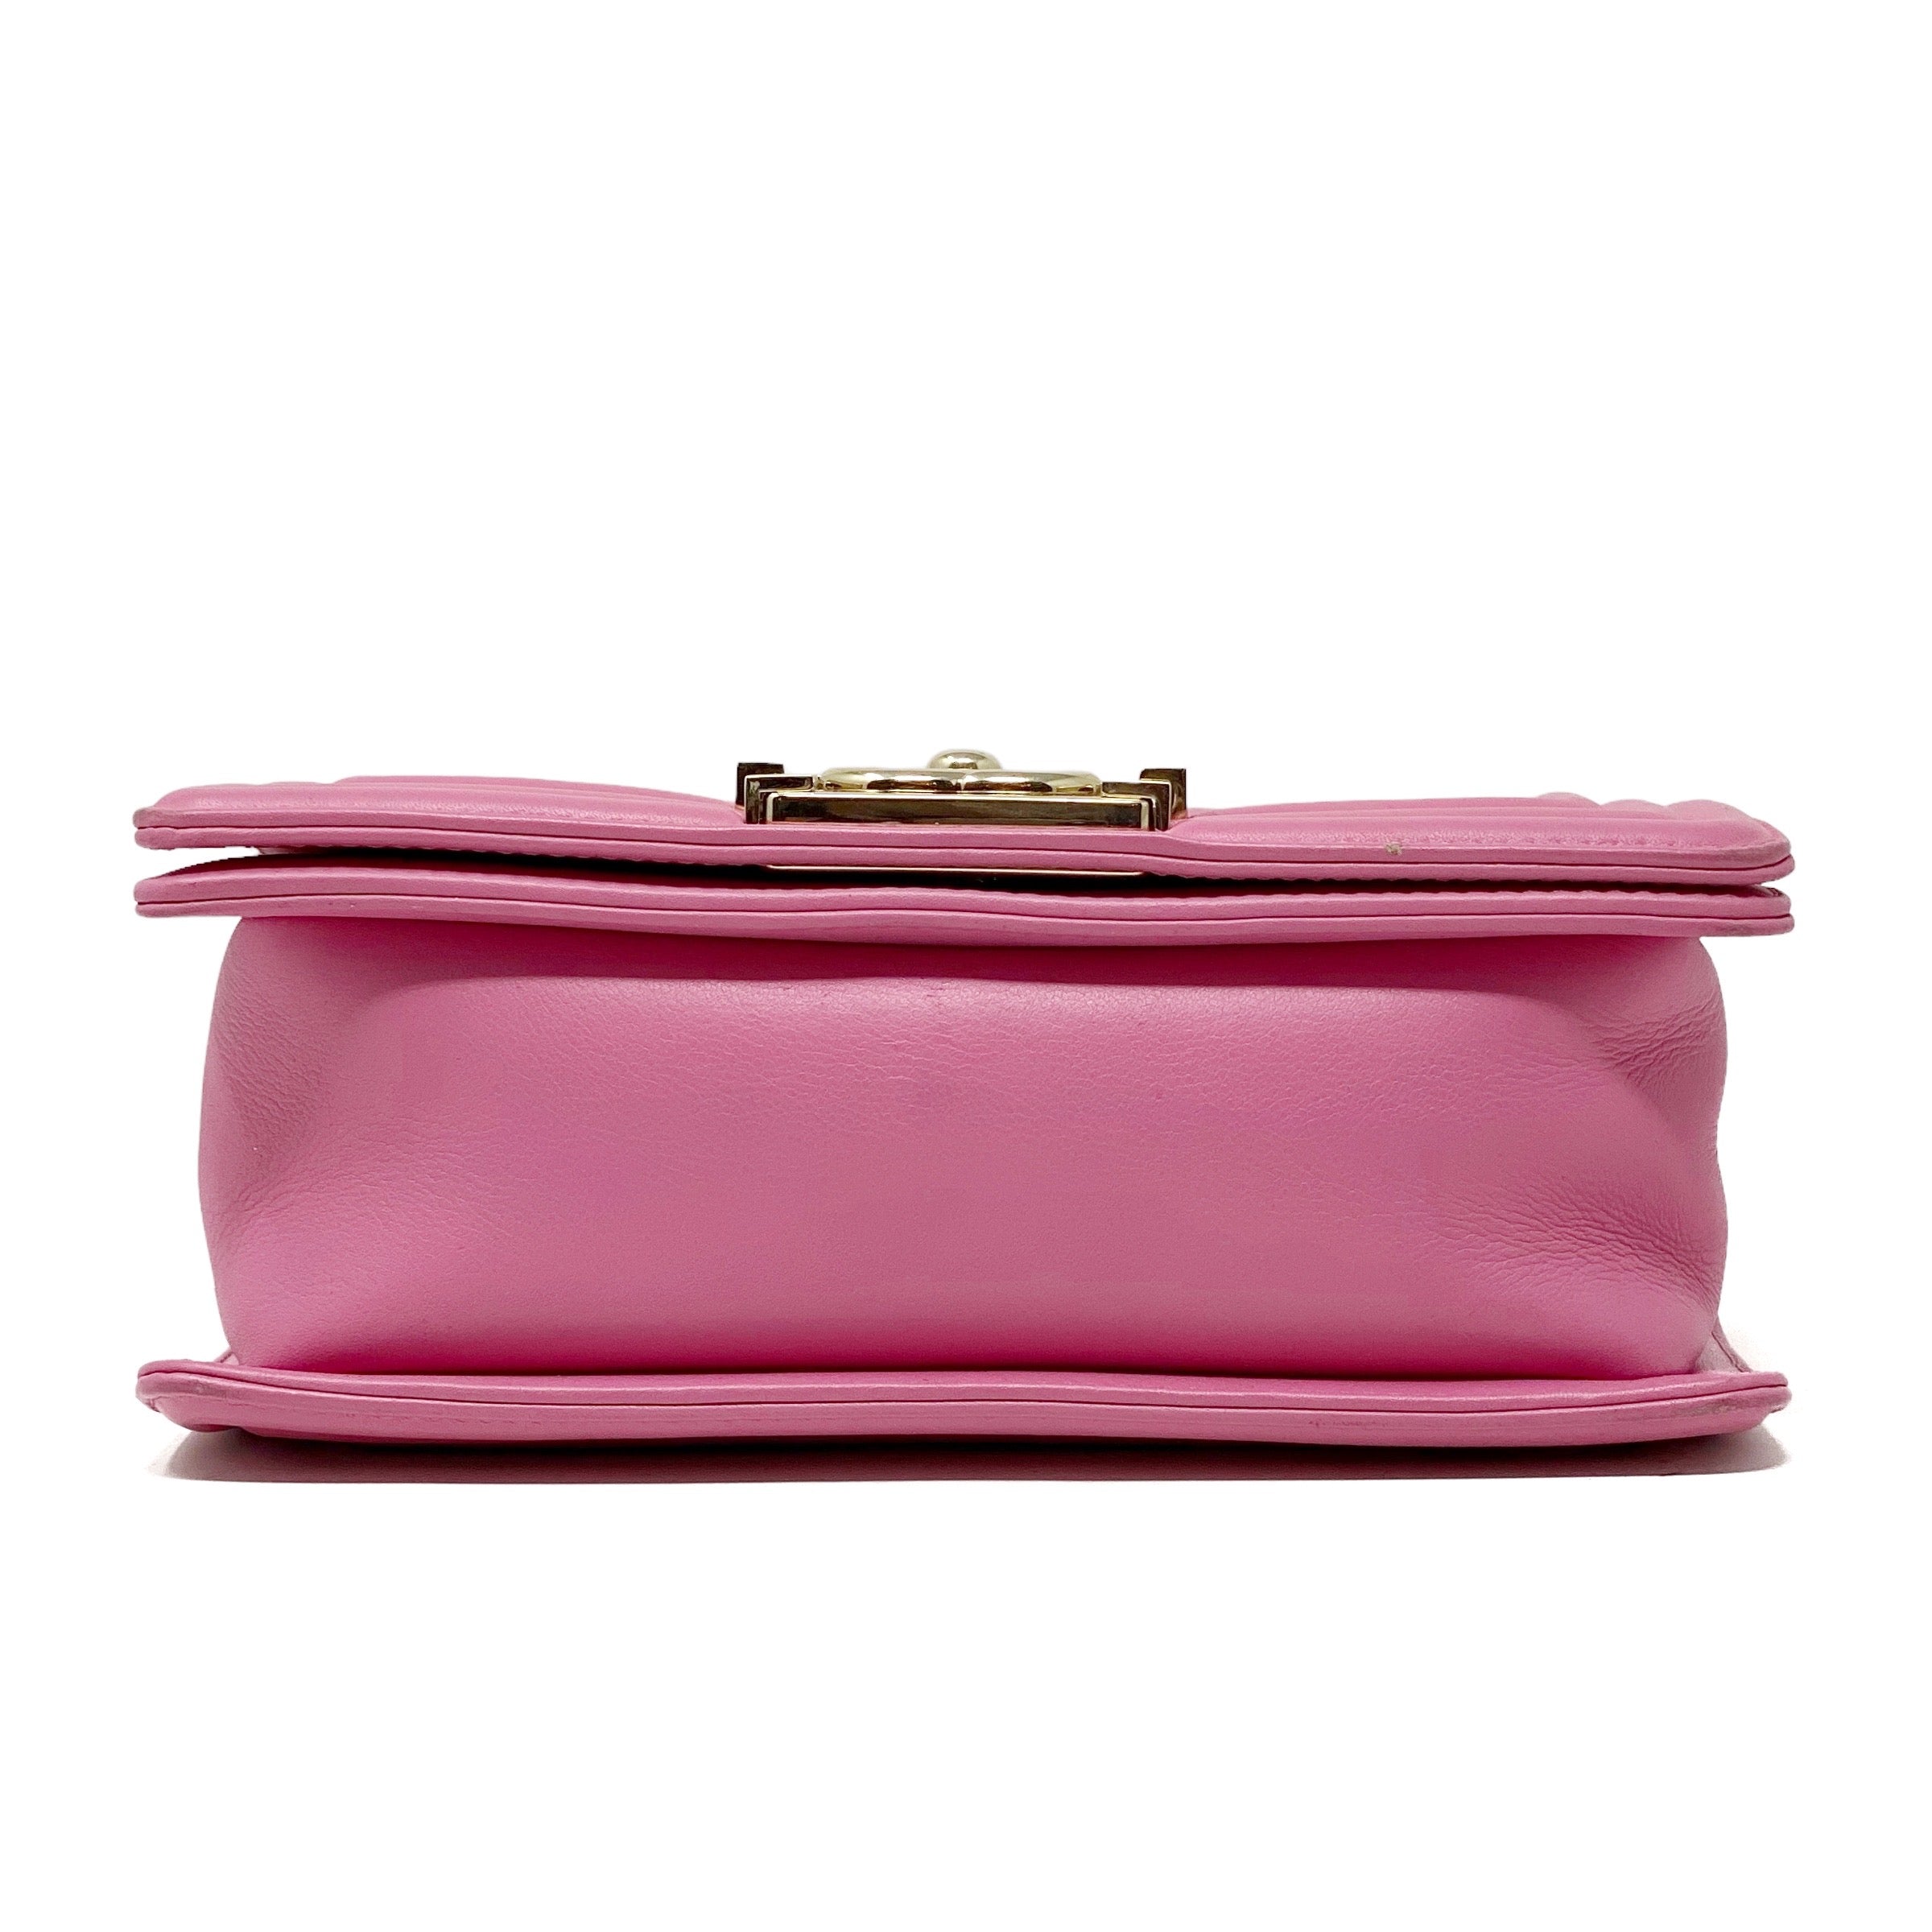 Chanel Pink Calfskin Small Boy Bag